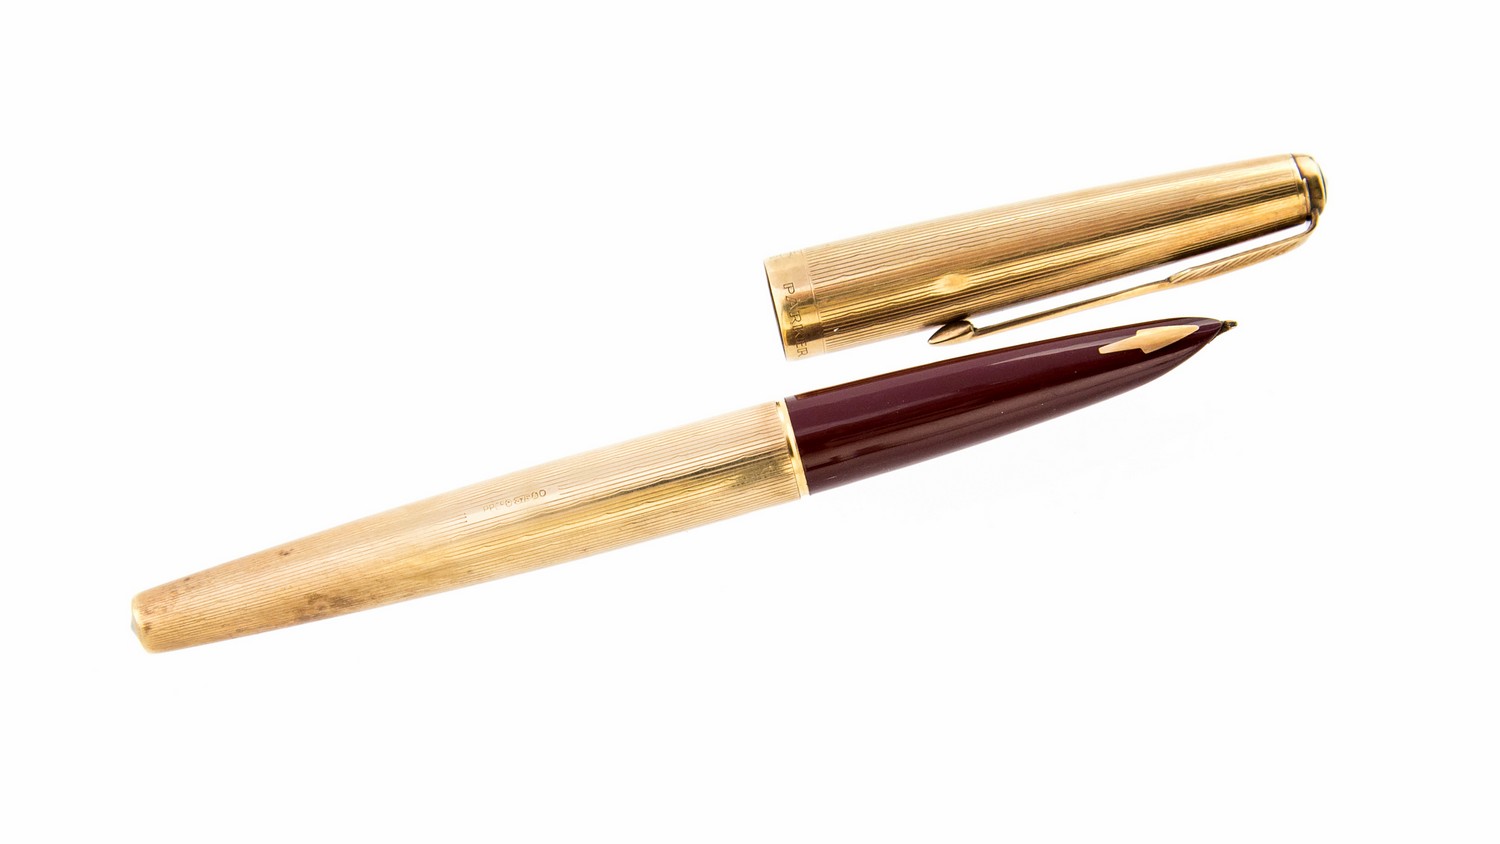 Parker 61 9 carat gold fountain pen, engine turned barley stripe design, with Burgundy nib section,